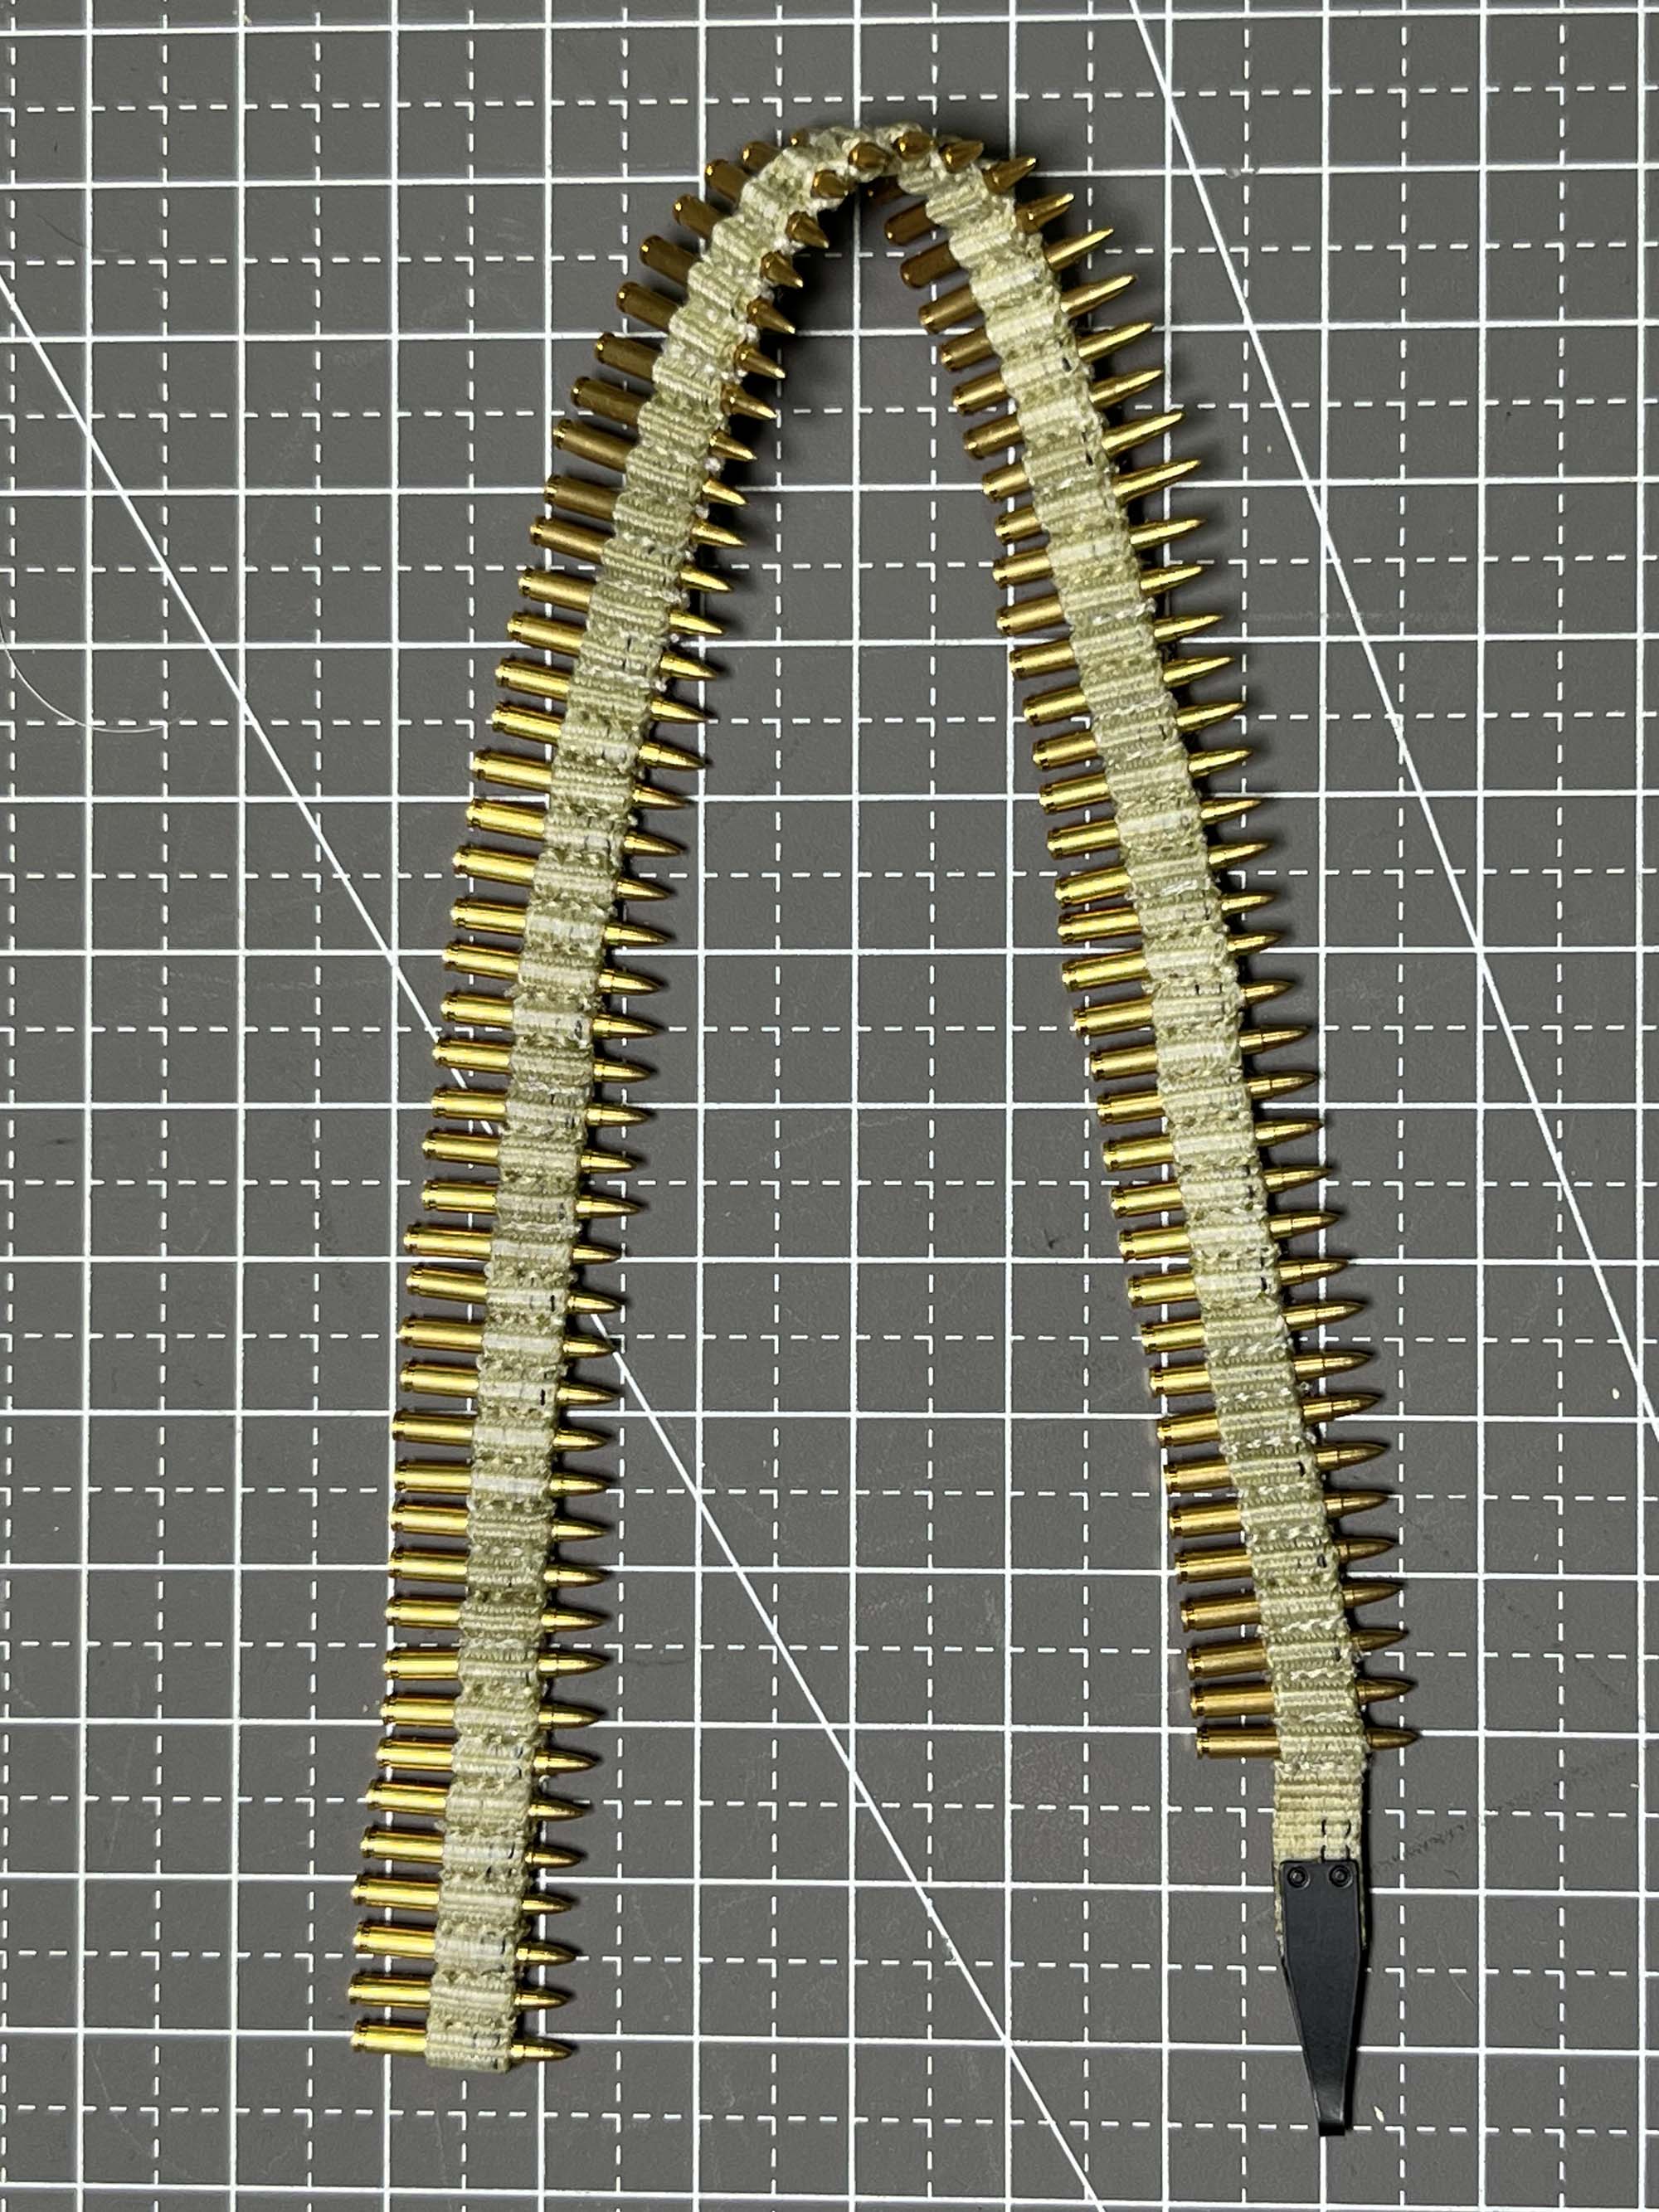 30 Cal Ammo Belt- FP004 1/6 Scale